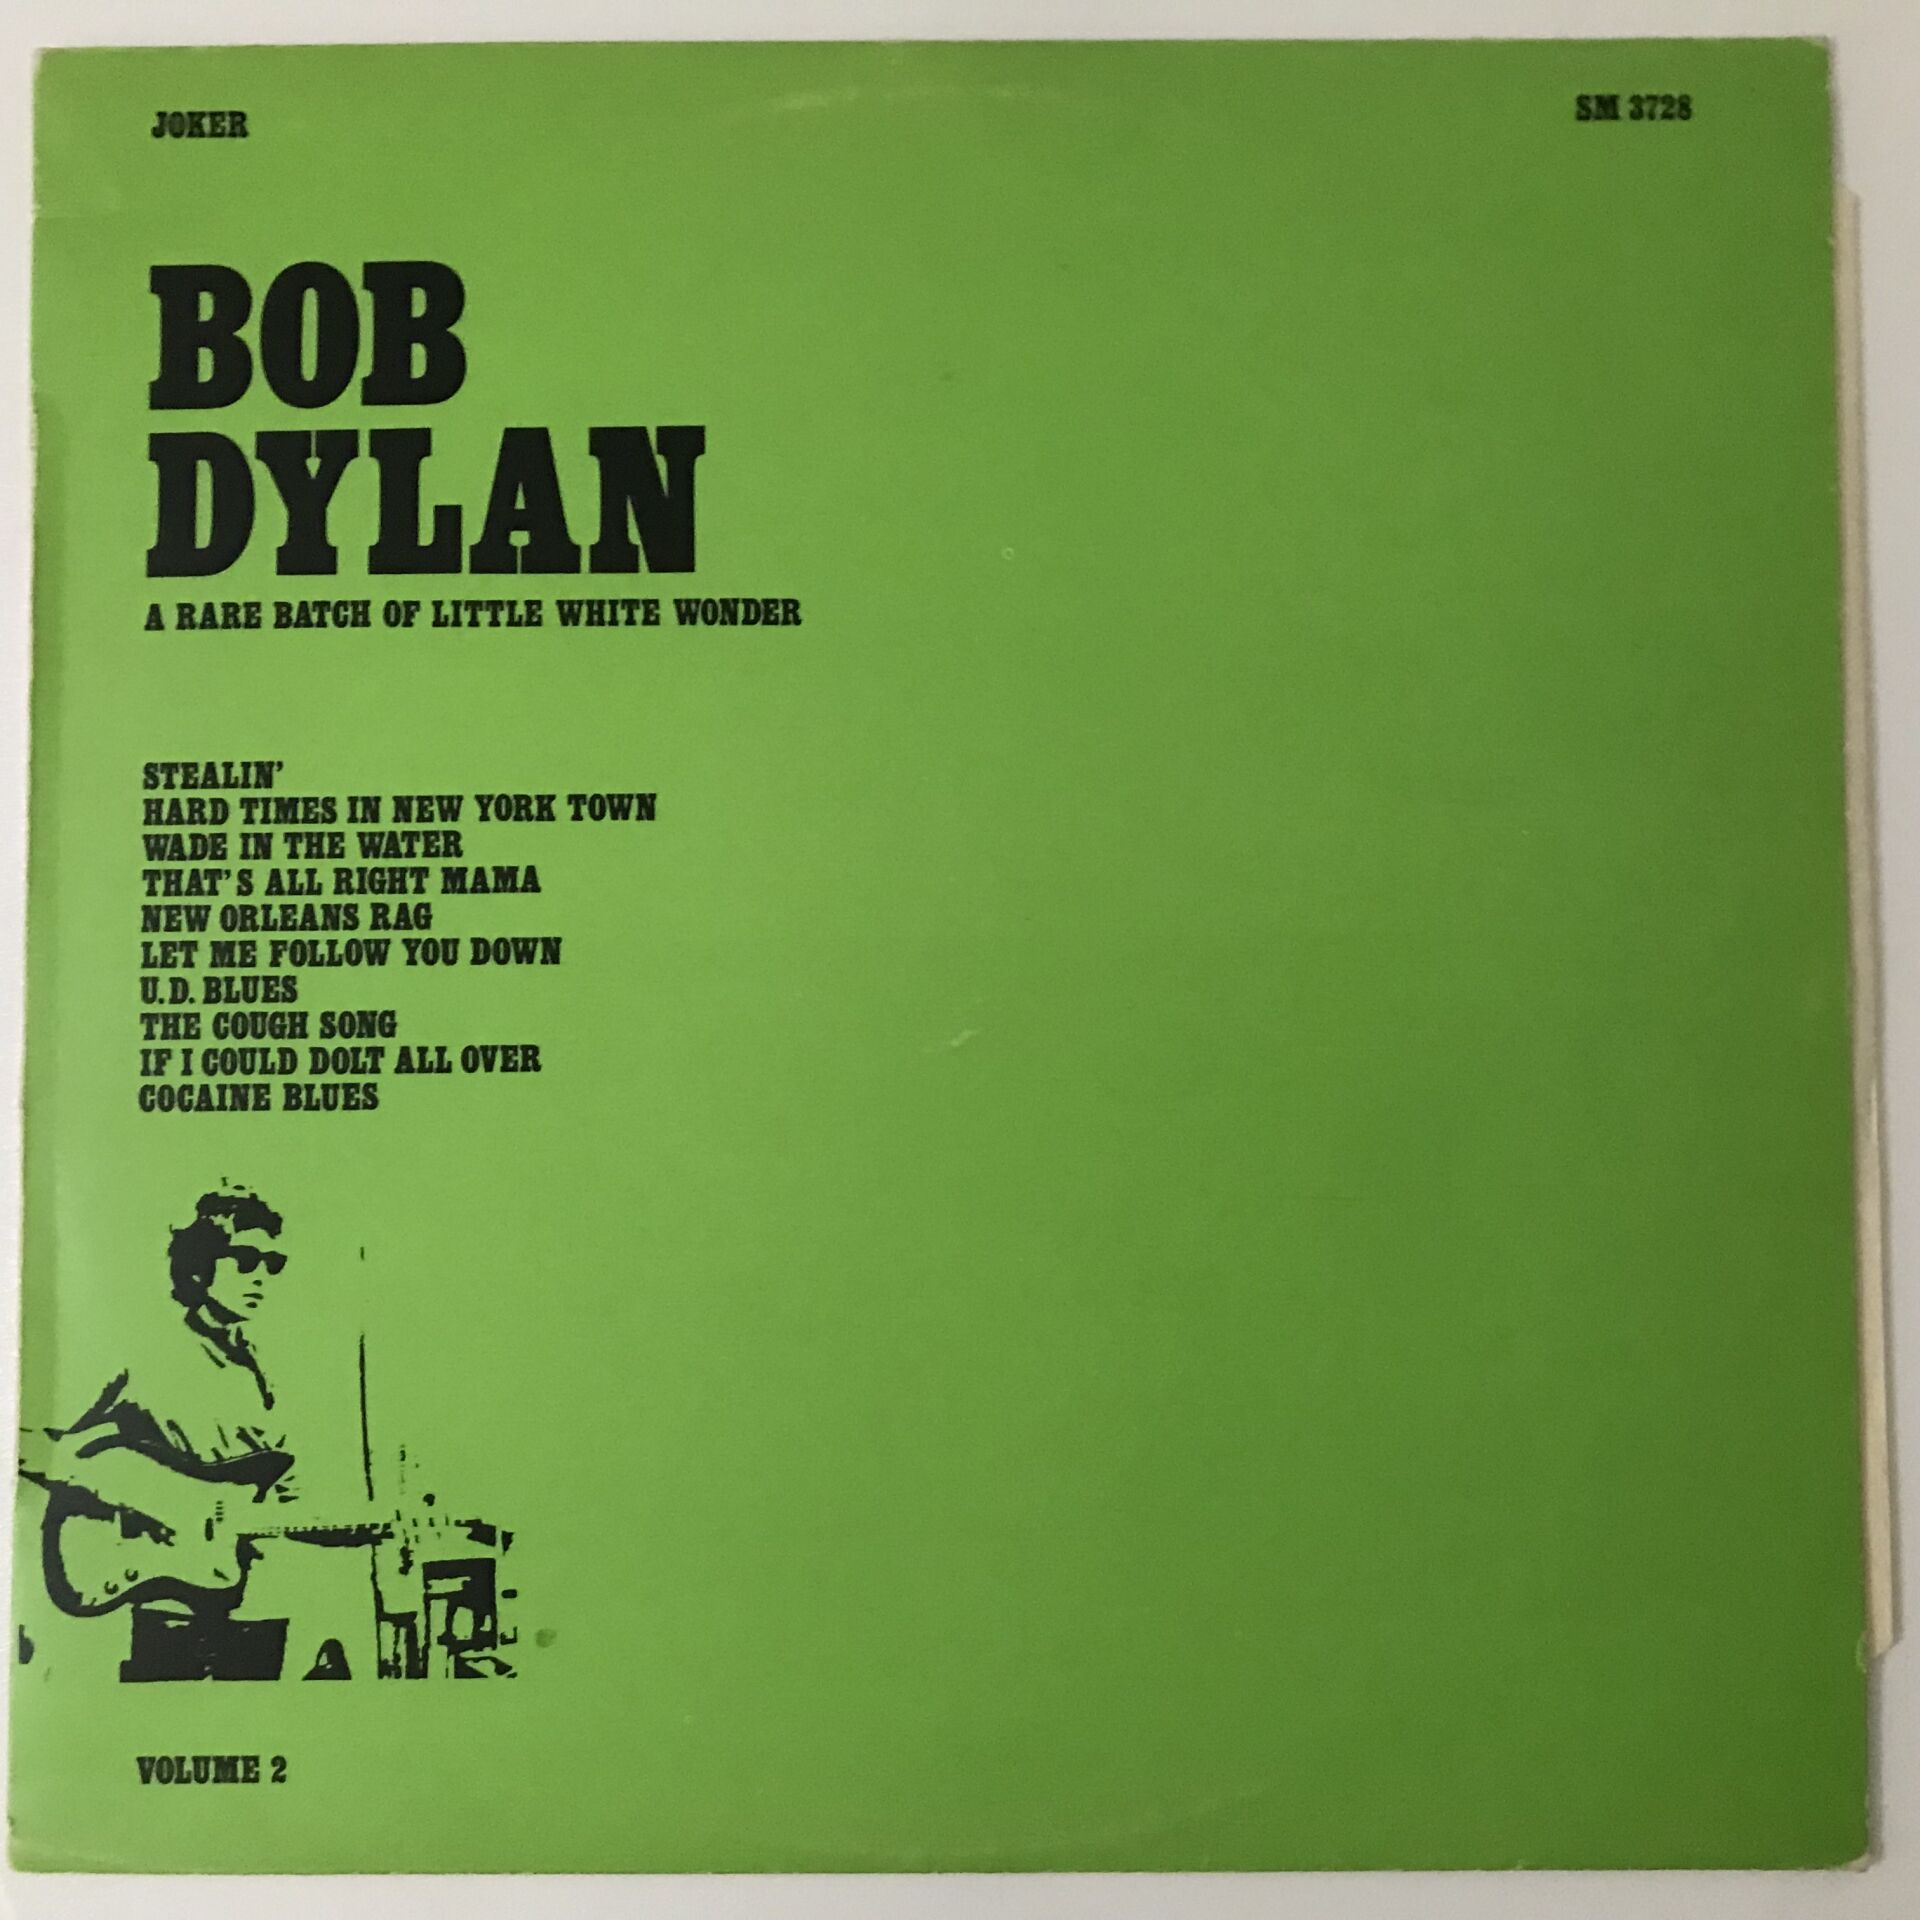 Bob Dylan – A Rare Batch Of Little White Wonder - Volume 2